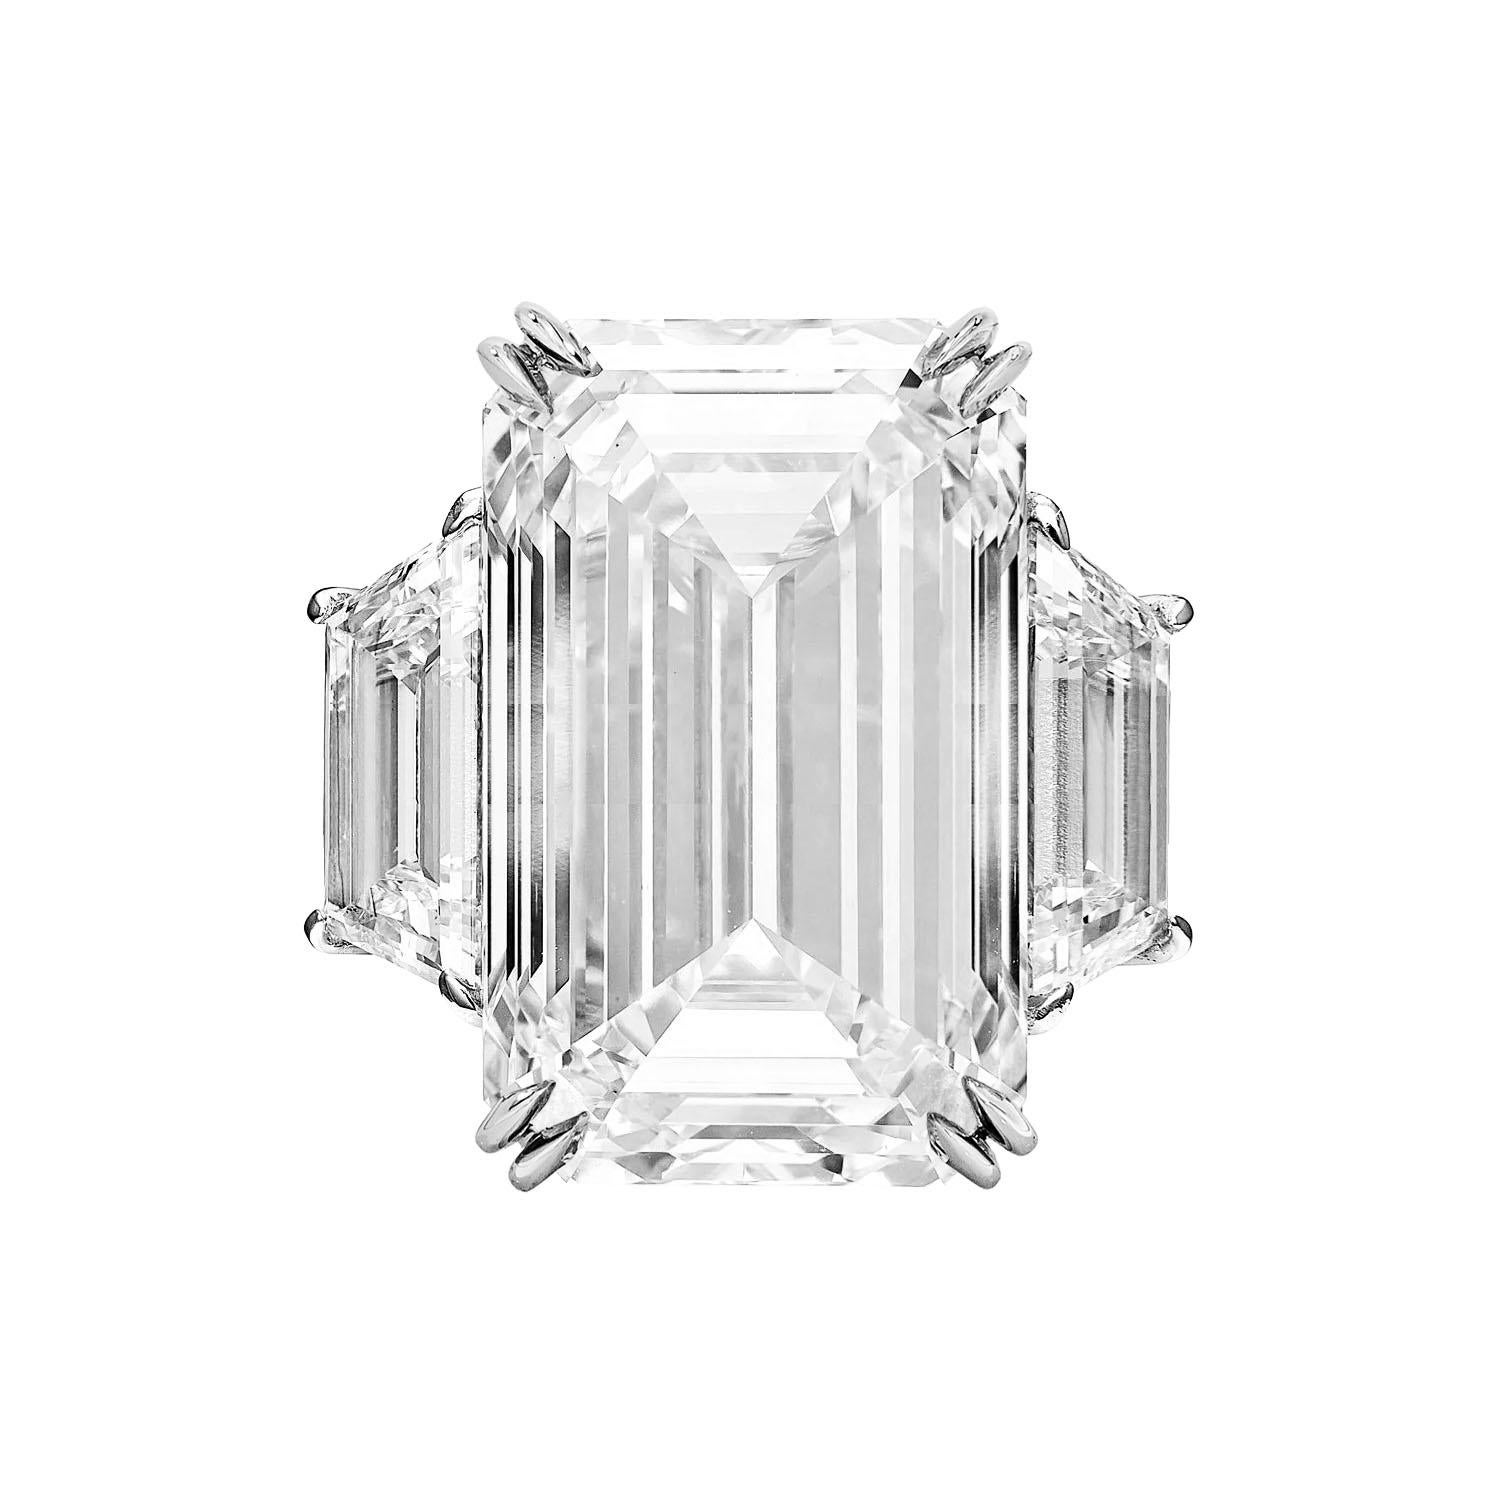 GIA Certified 10 Carat Emerald Diamond Diamond Ring
f color
vs1 clarity
excellent polish
excellent symmetry
faint fluorescence